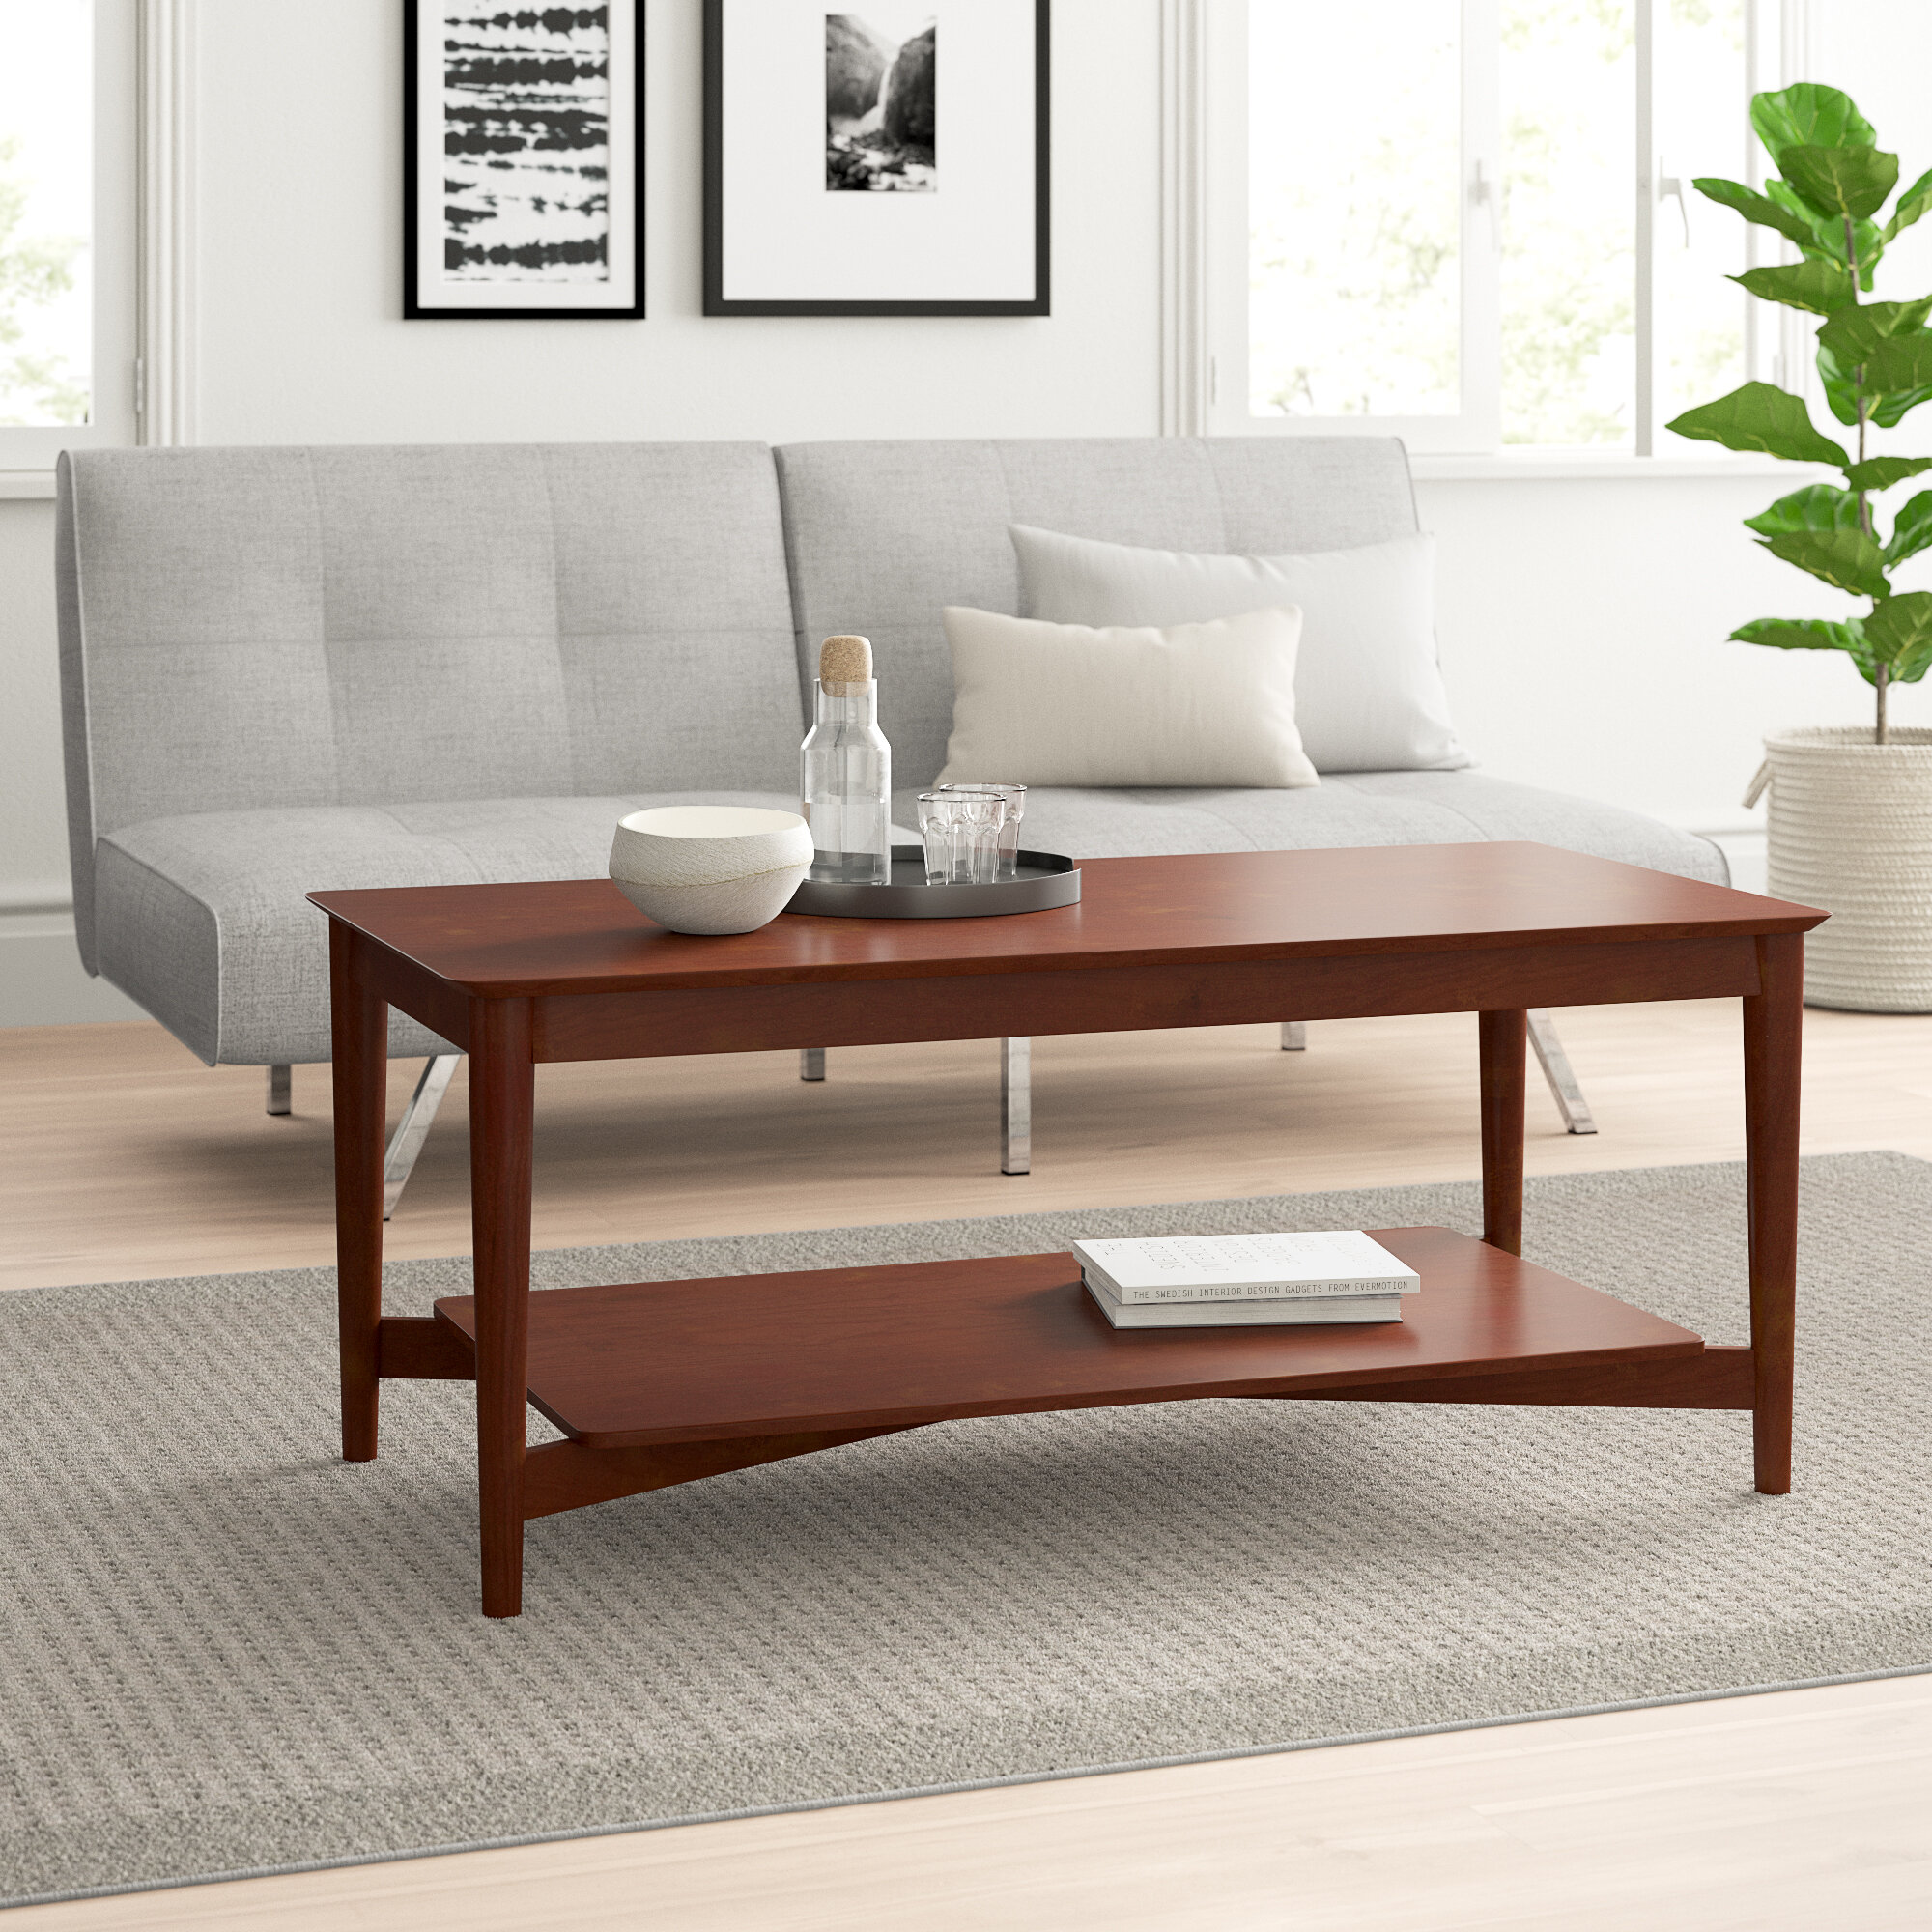 sofa table design